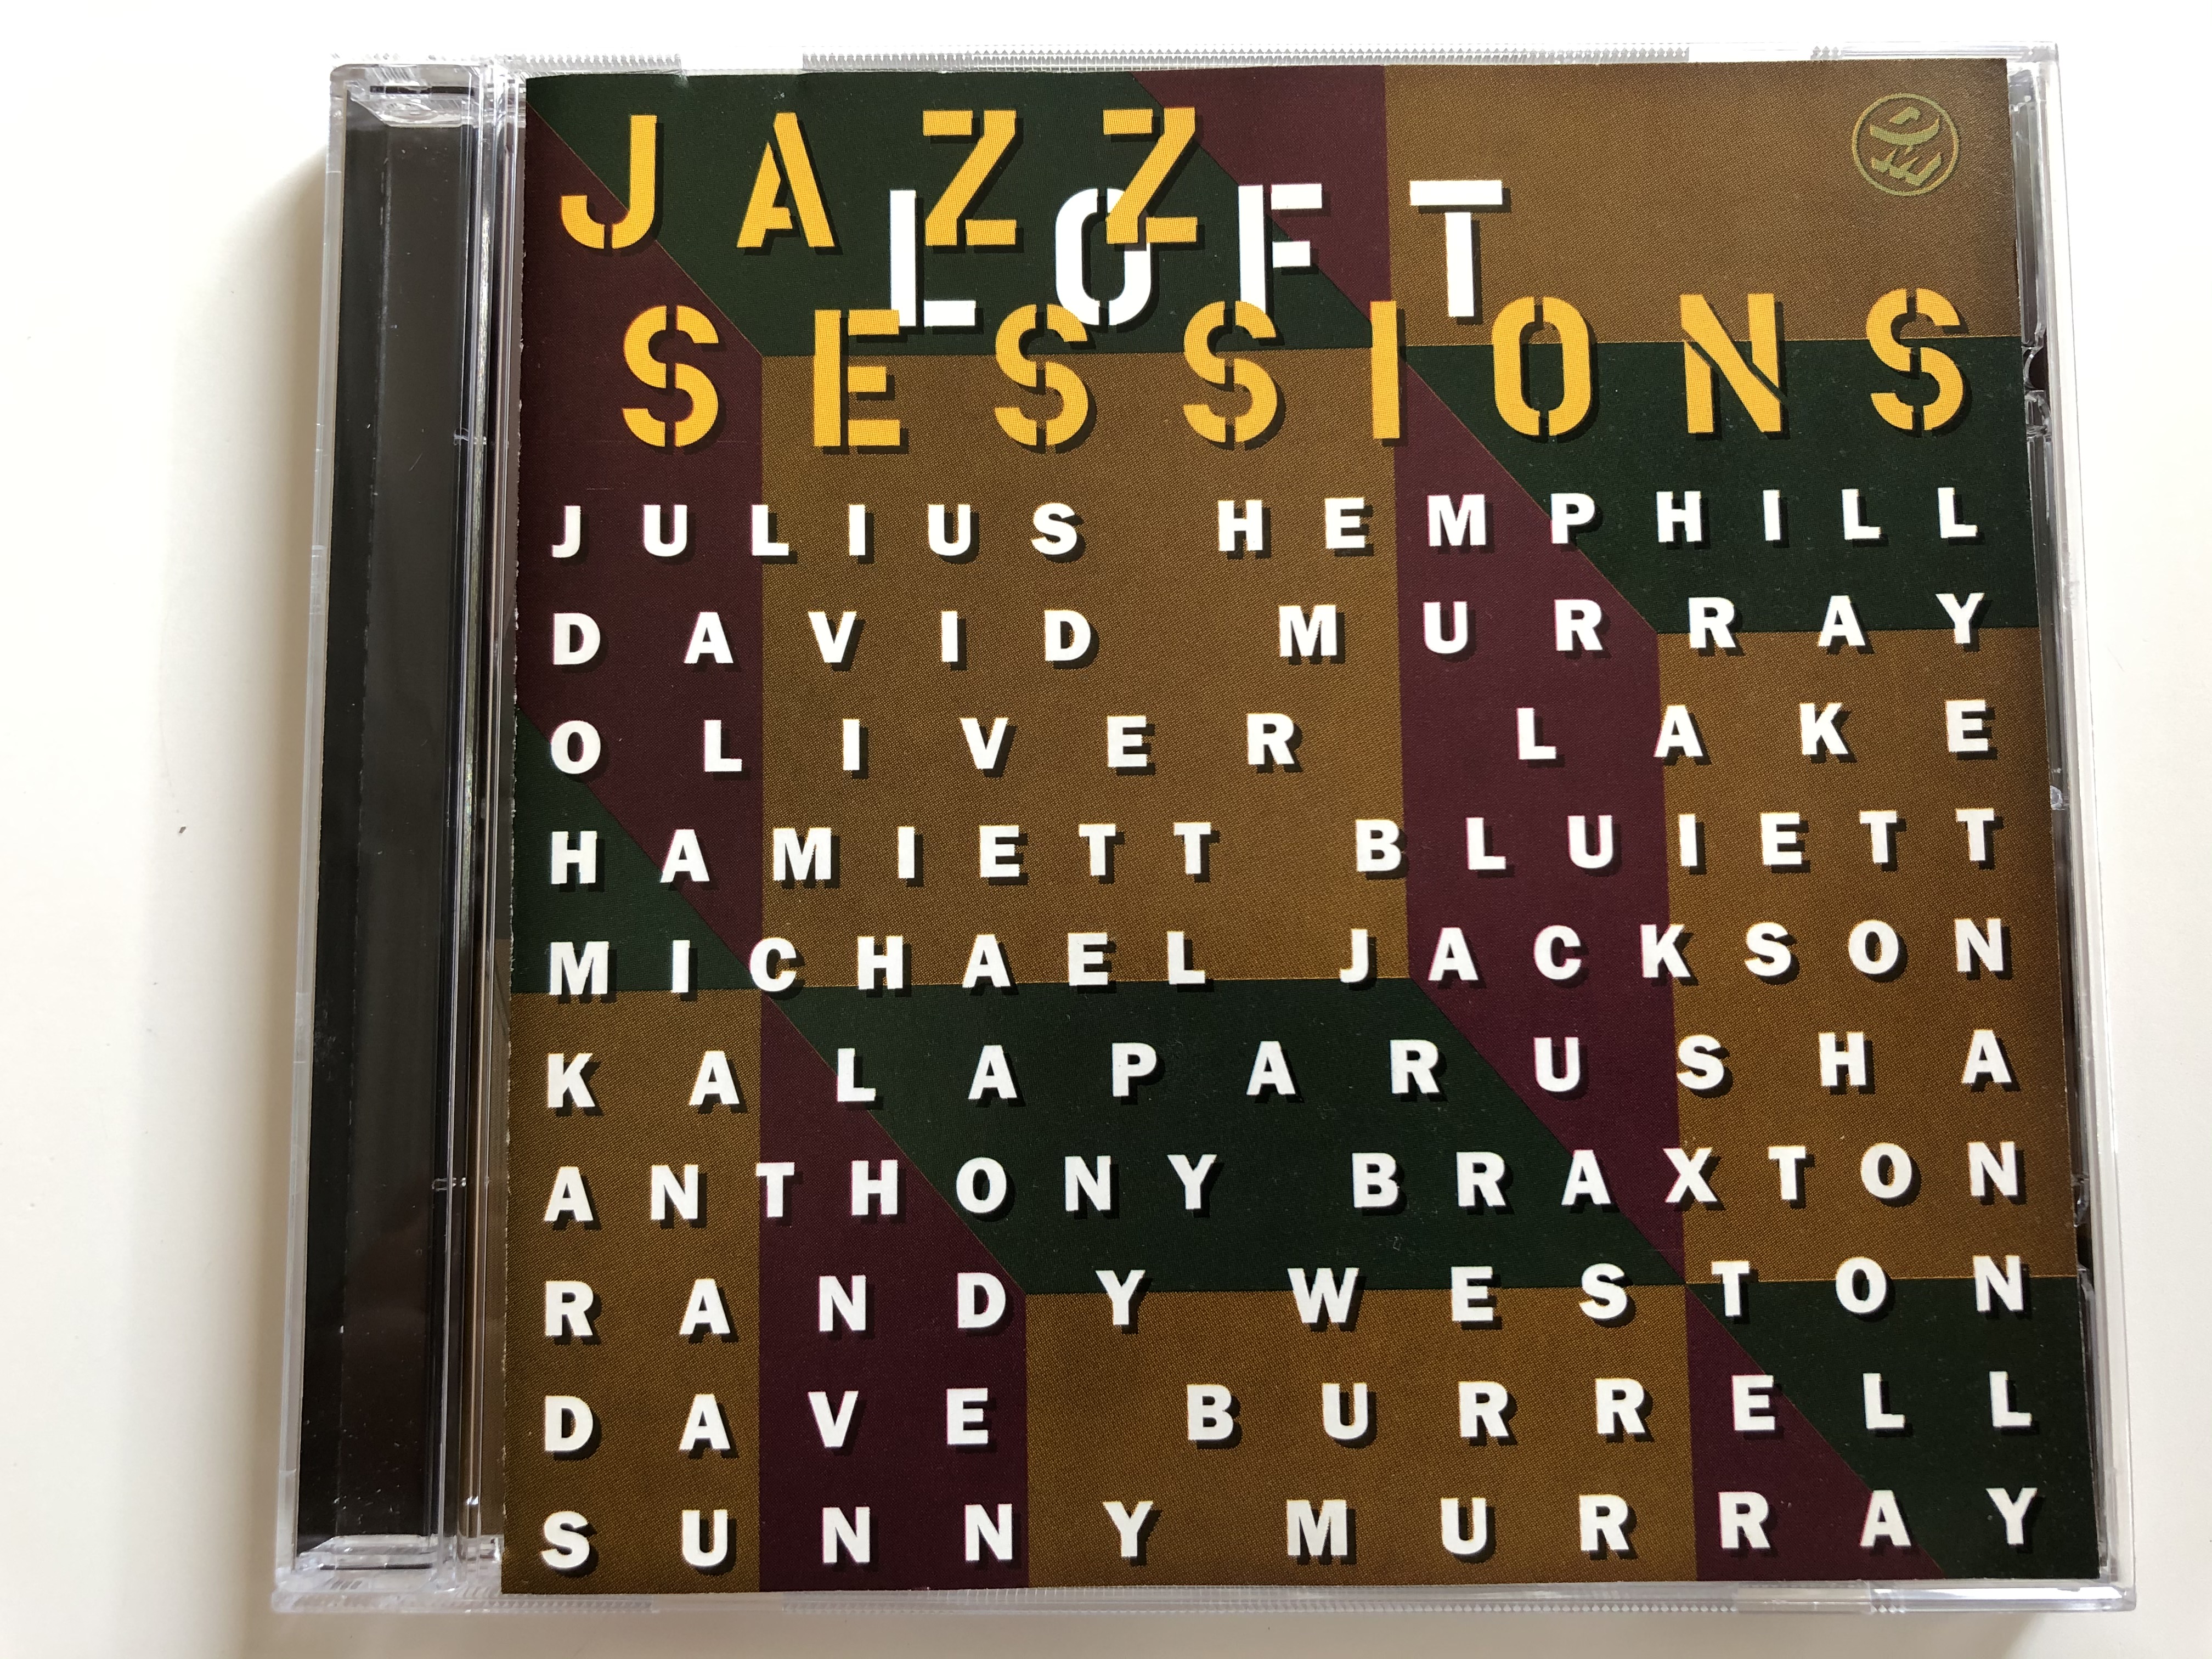 jazz-loft-sessions-julius-hemphill-david-murray-oliver-lake-hamiet-bluiett-michael-jackson-kalaparusha-anthony-braxton-randy-weston-dave-burrell-sunny-murray-douglas-music-audio-cd-199-1-.jpg